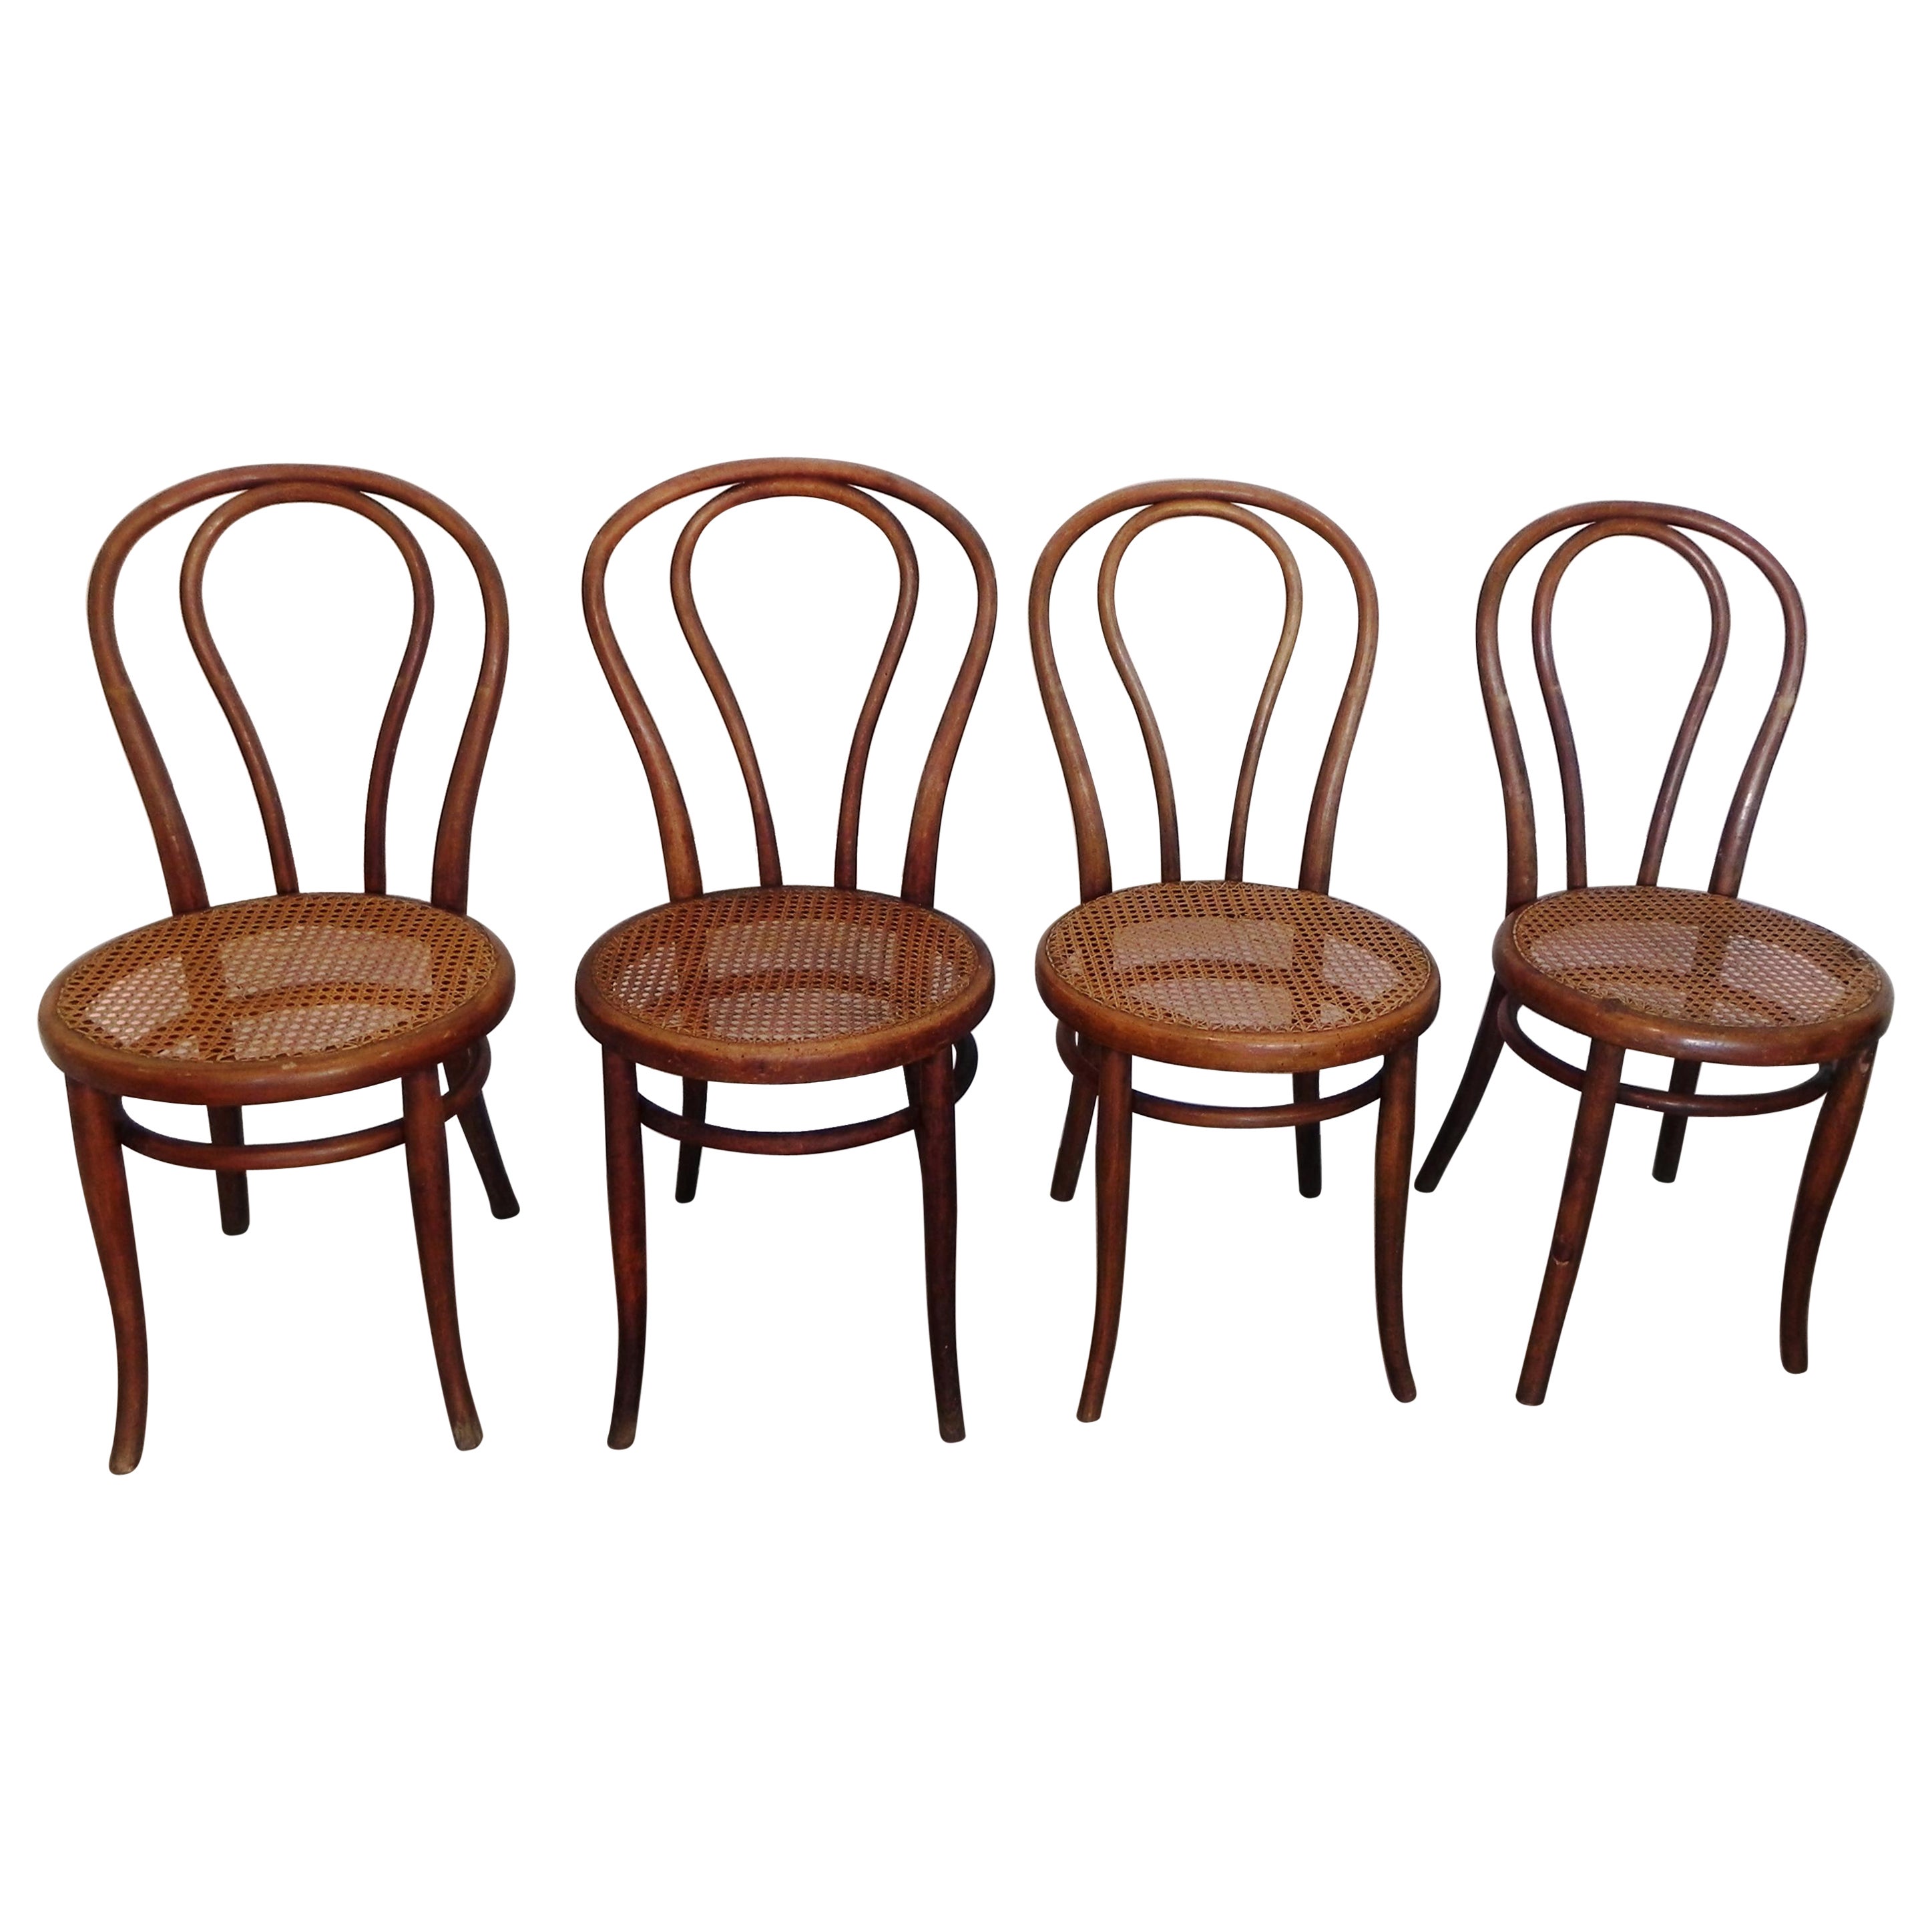 4 Thonet Austria No. 18 chairs